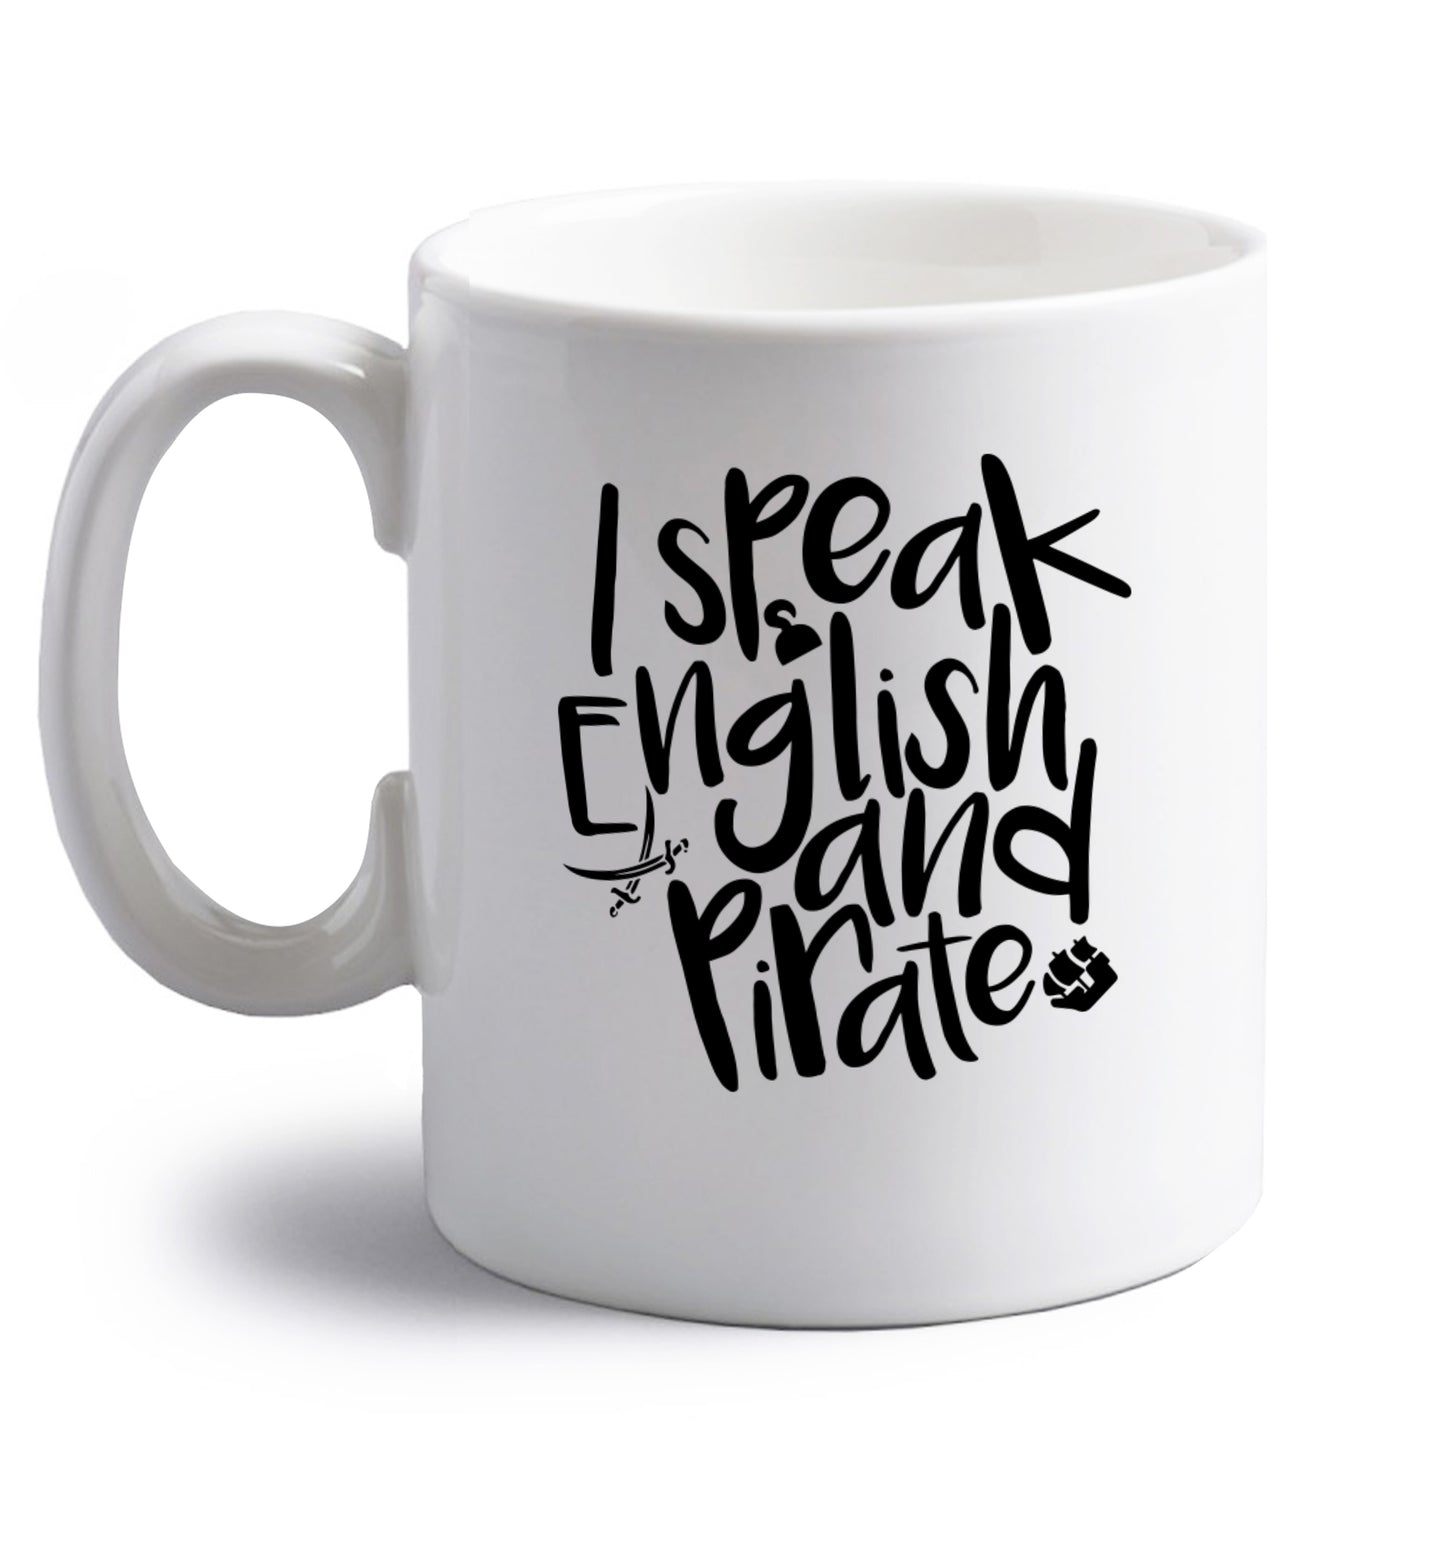 I speak English and pirate right handed white ceramic mug 